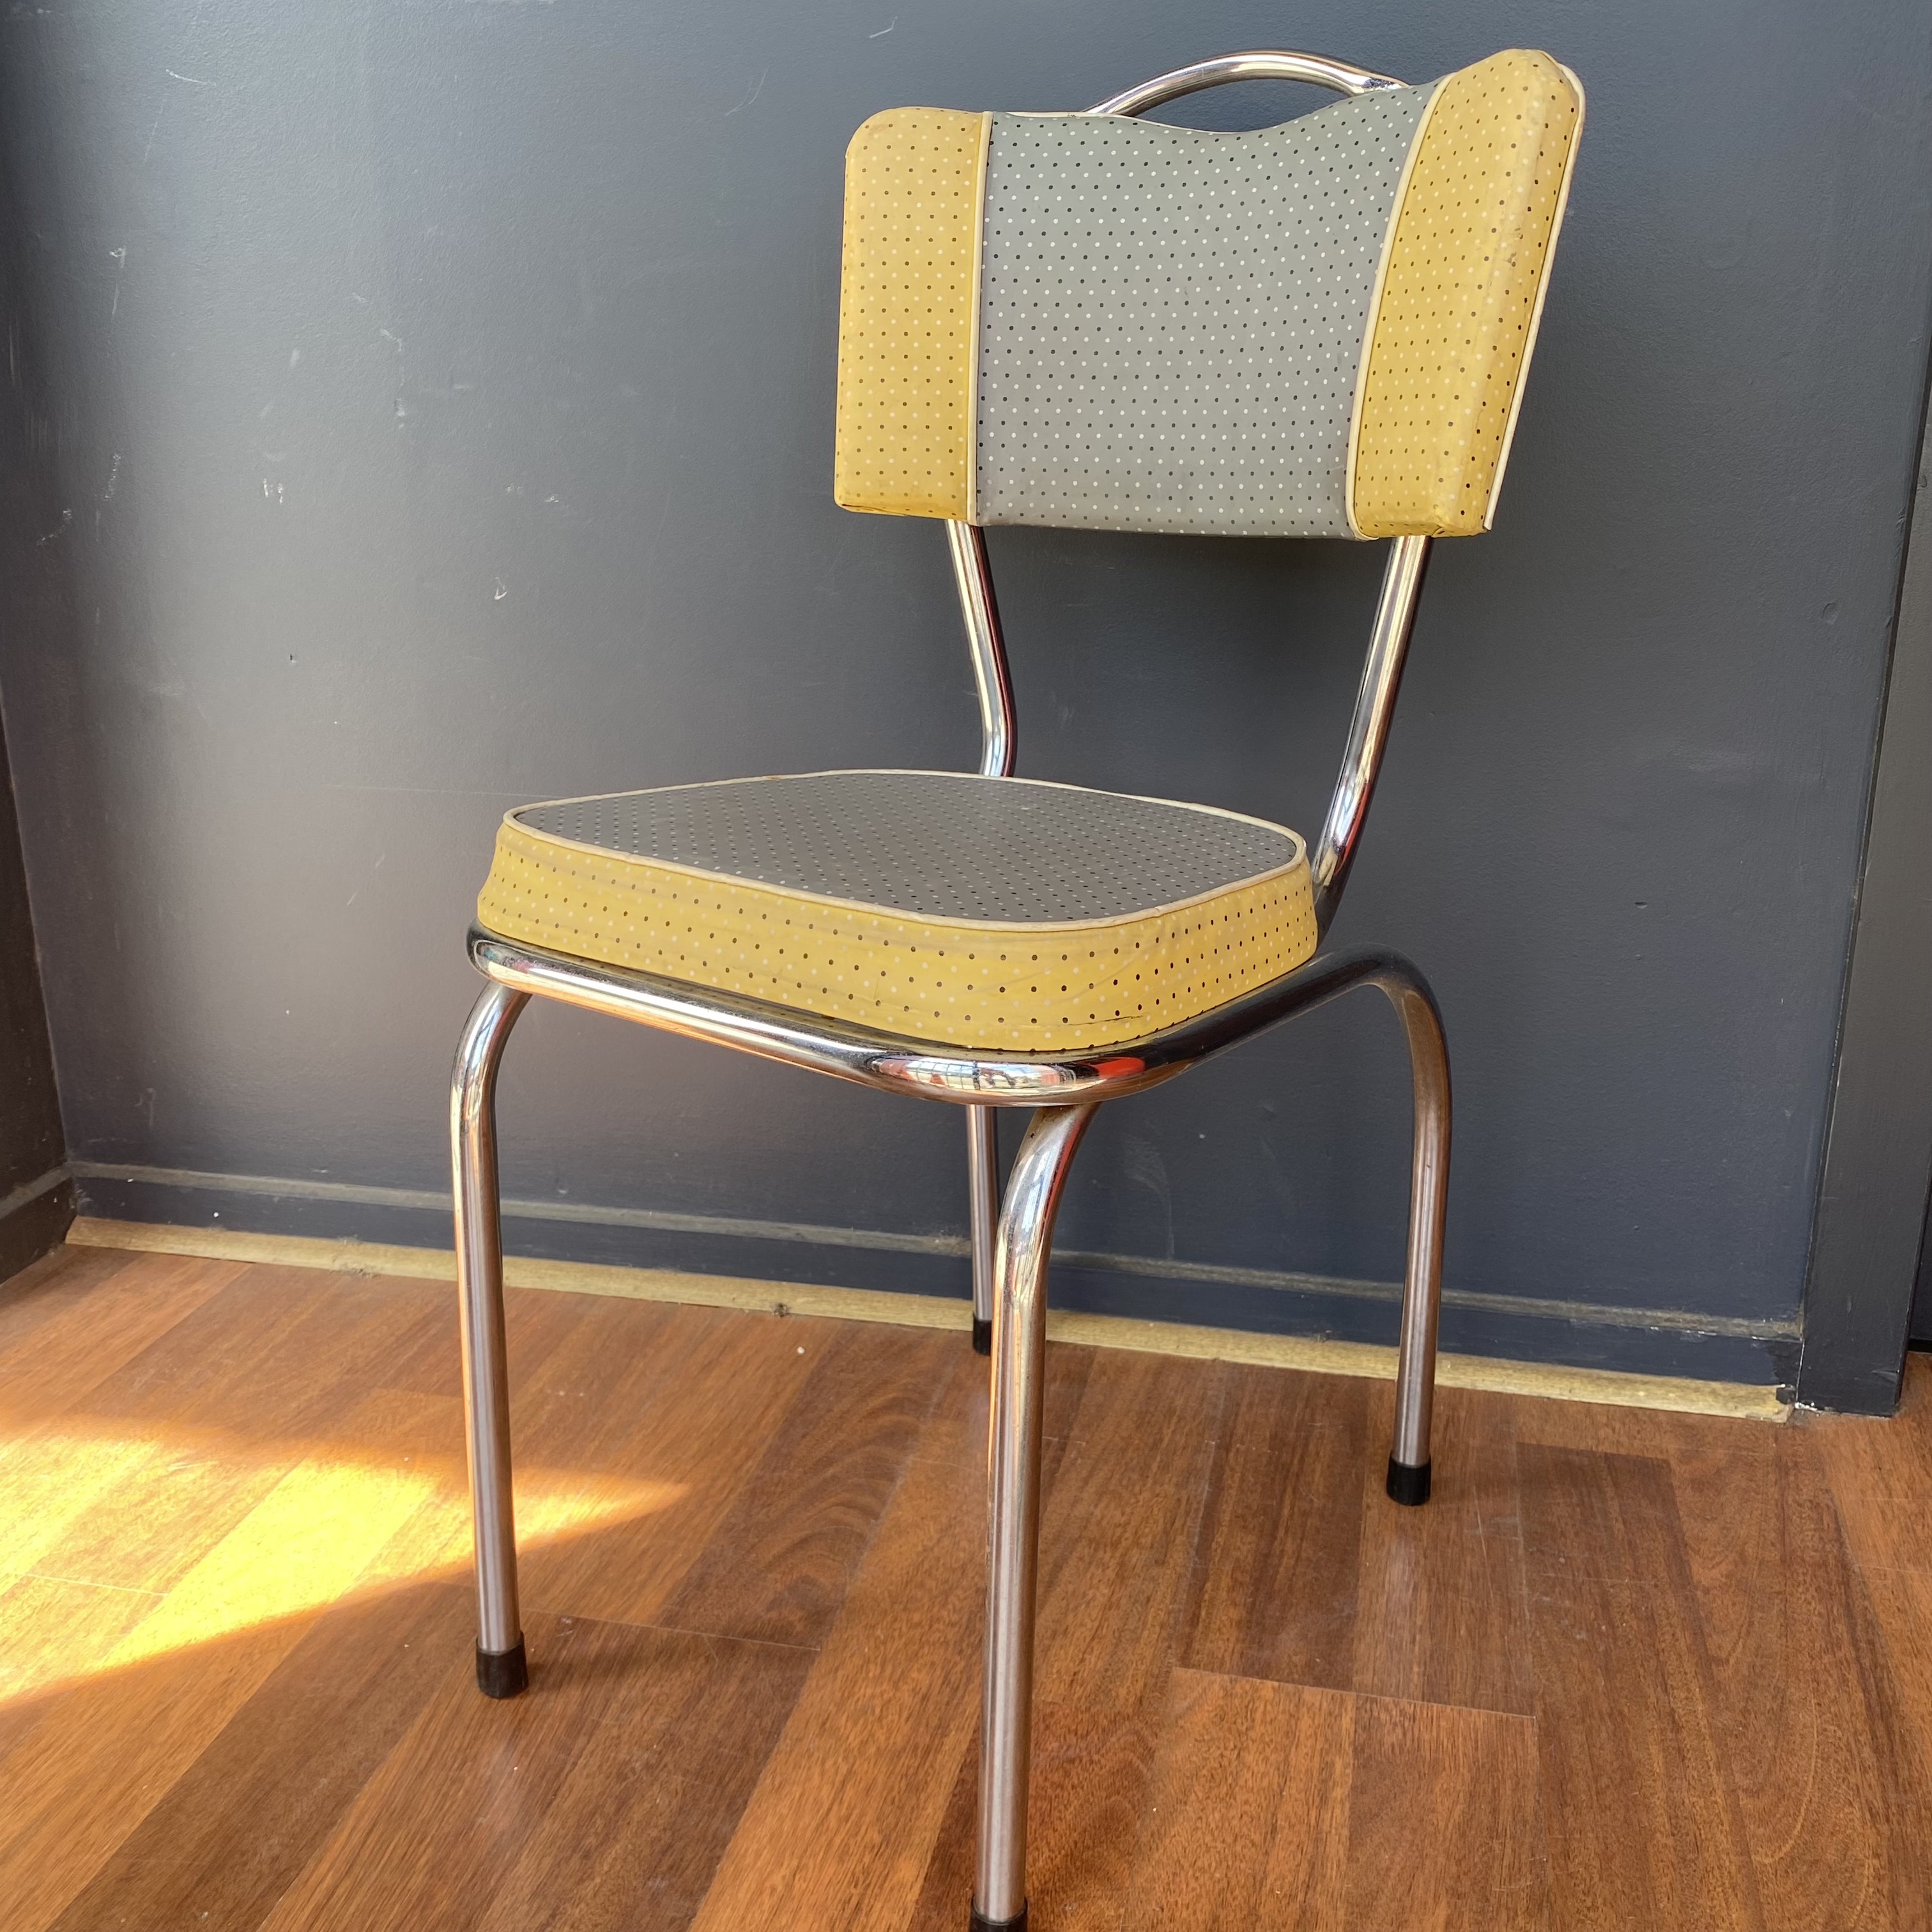 CHAIR, 1950s Kitchen Chair - Grey & Yellow Polka Dot